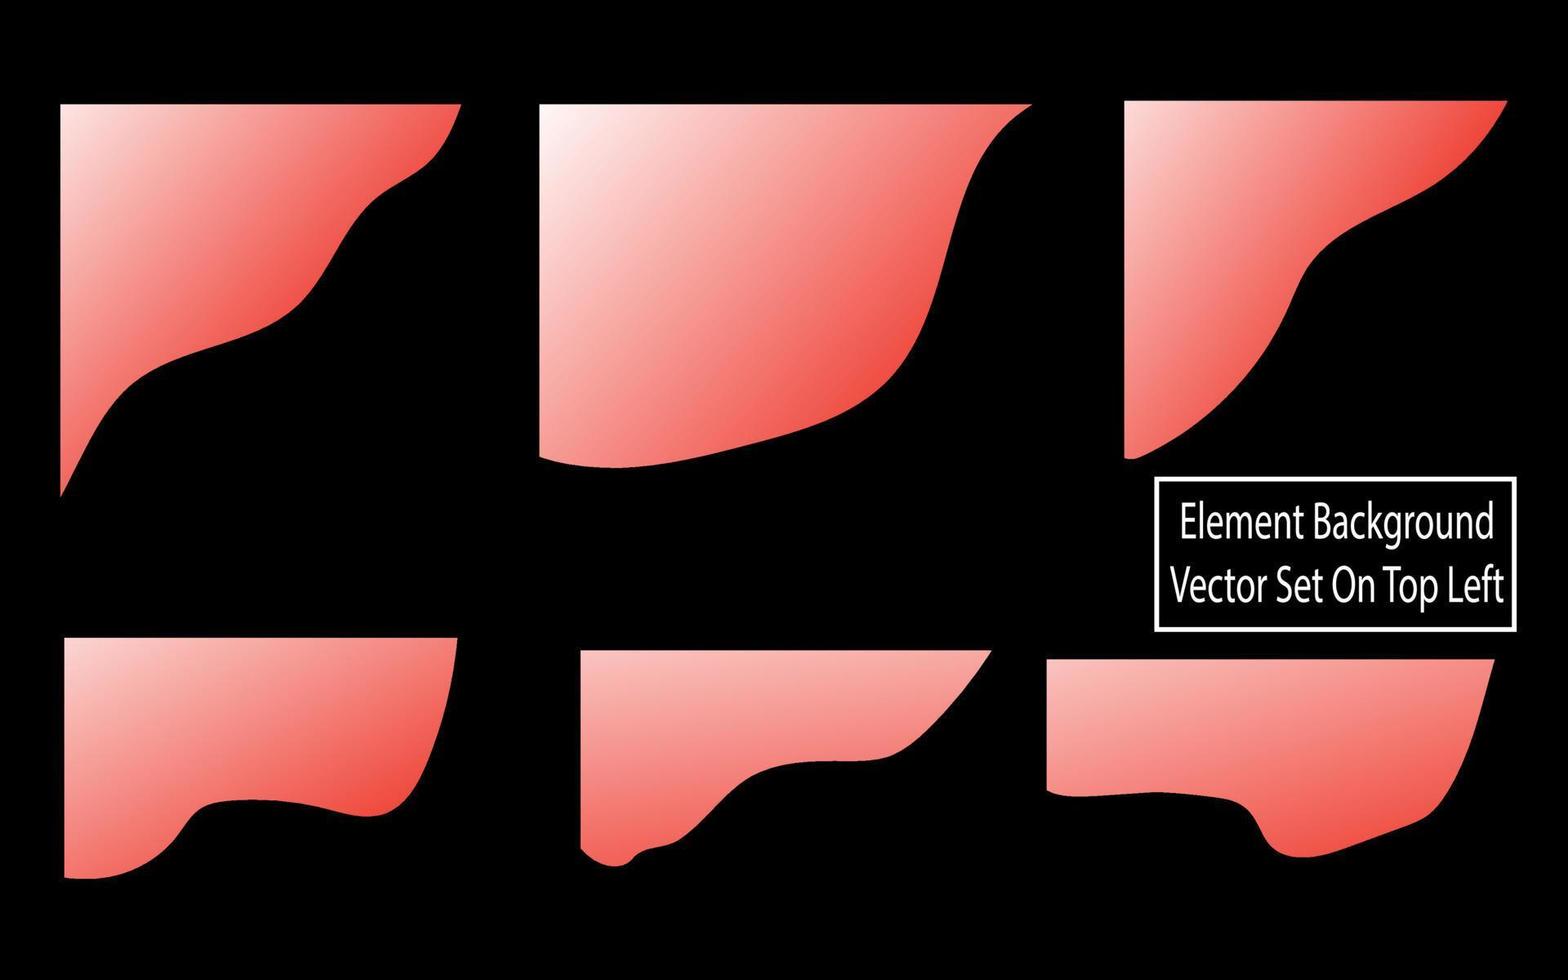 Element Background Vector Set On Top Left Position